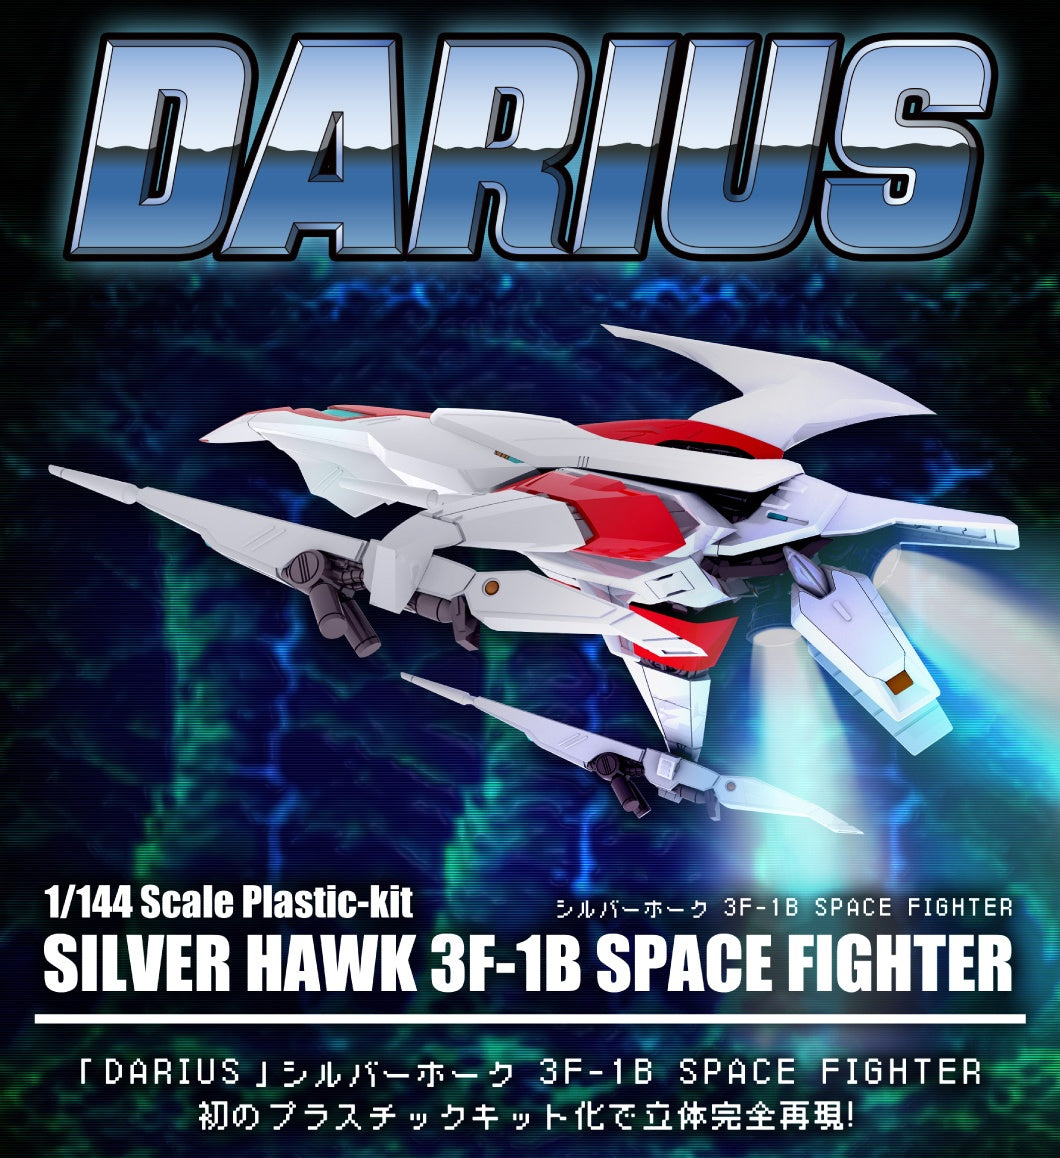 SILVER HAWK 3F-1B SPACE FIGHTER